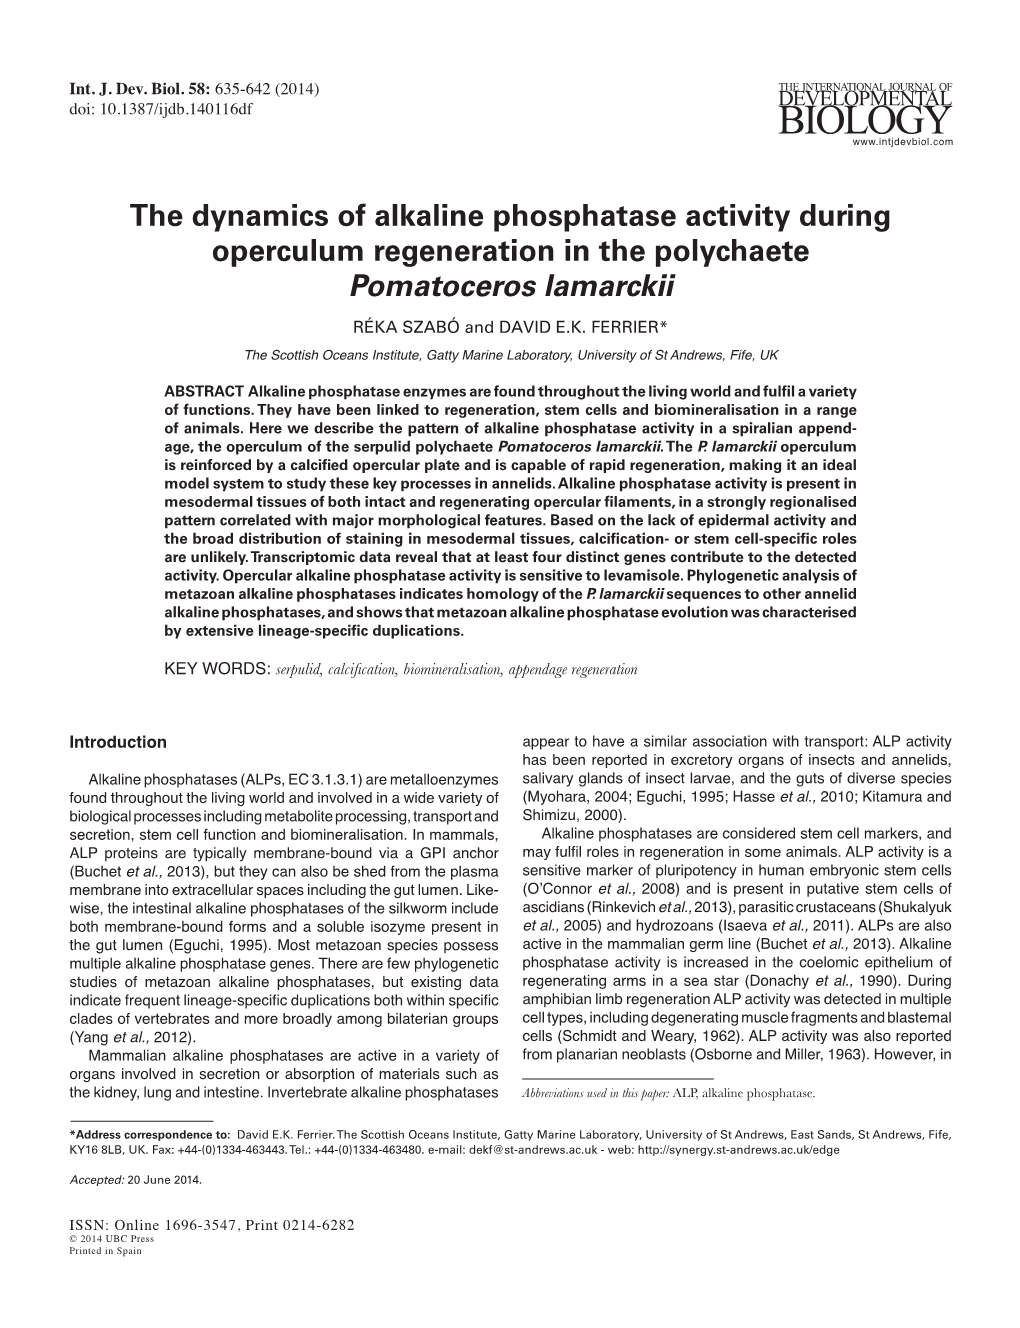 The Dynamics of Alkaline Phosphatase Activity During Operculum Regeneration in the Polychaete Pomatoceros Lamarckii RÉKA SZABÓ and DAVID E.K